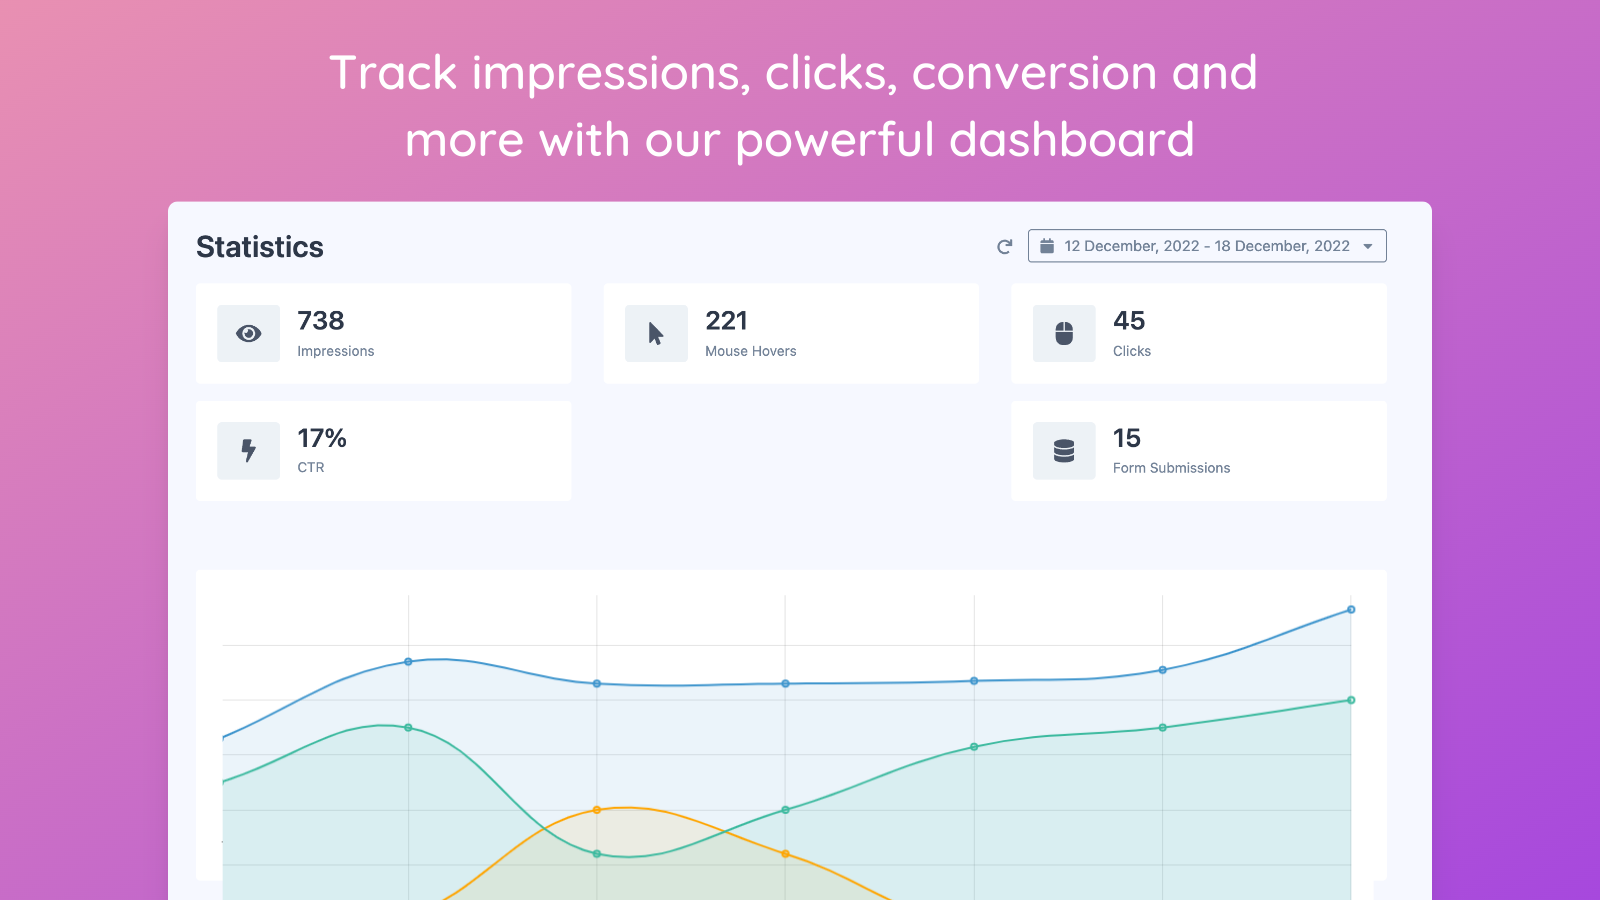 Track impressions, clicks, conversion and more